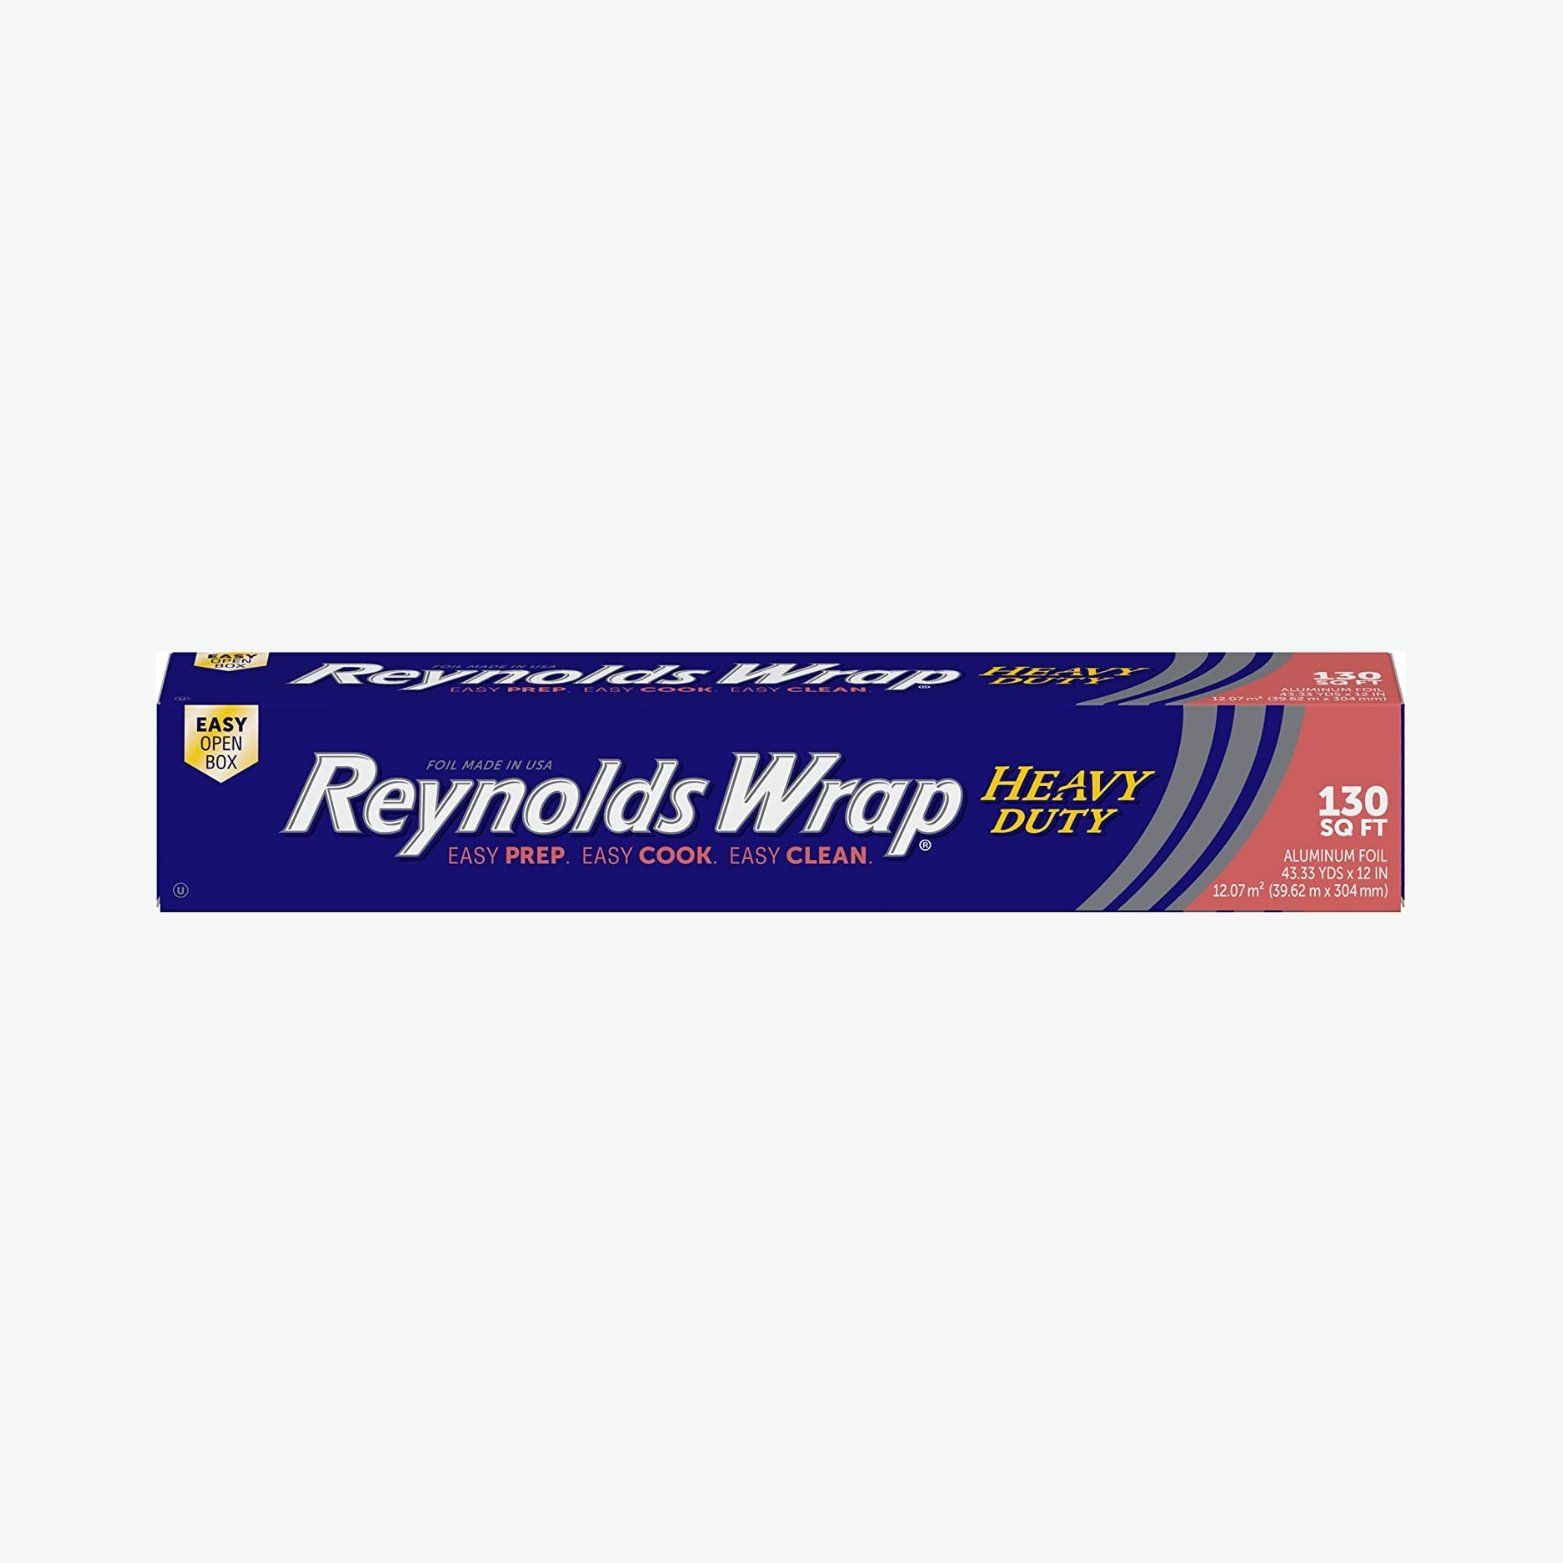 Reynolds Wrap.jpg